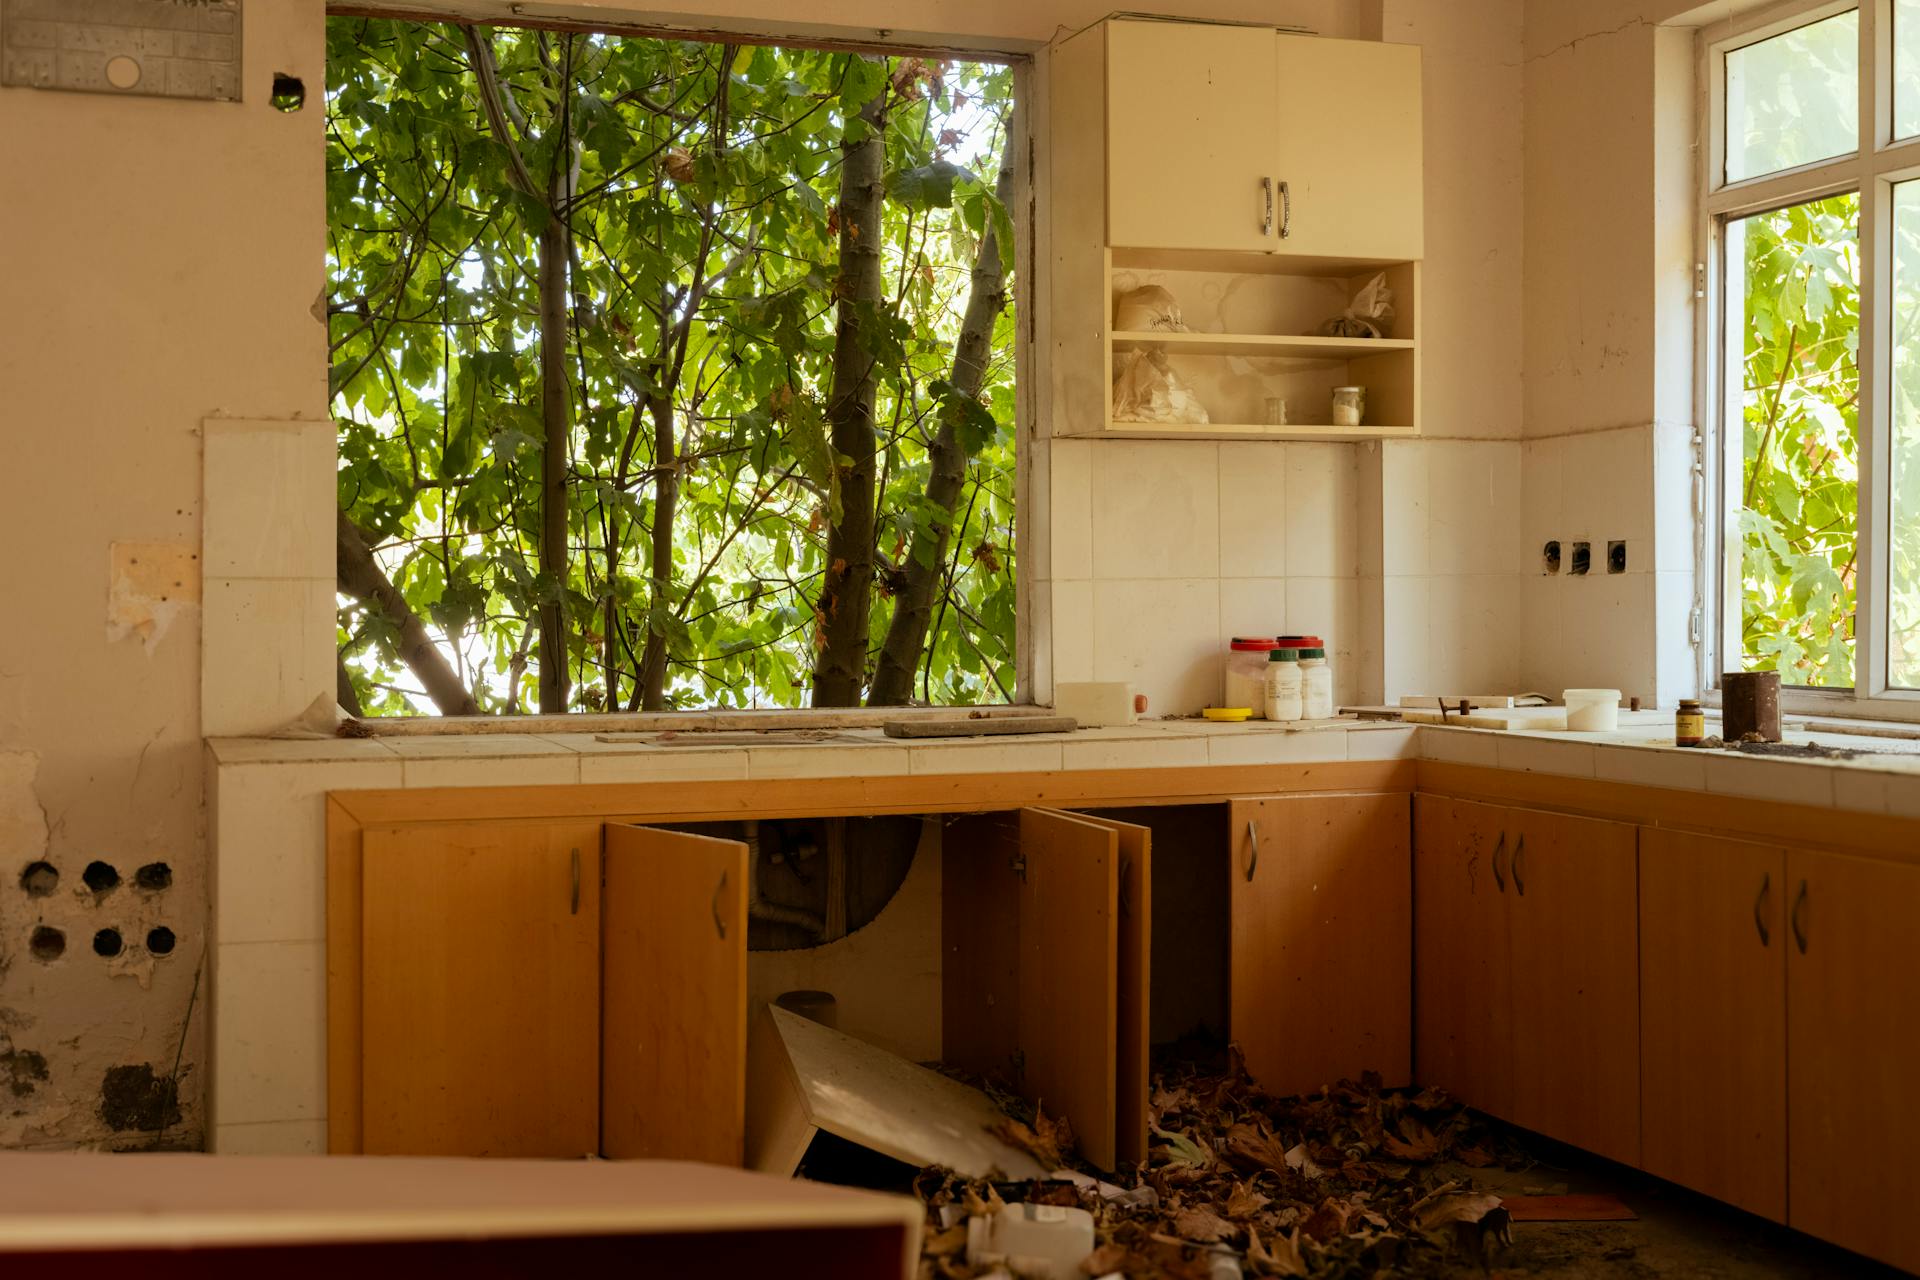 Damaged kitchen | Source: Pexels